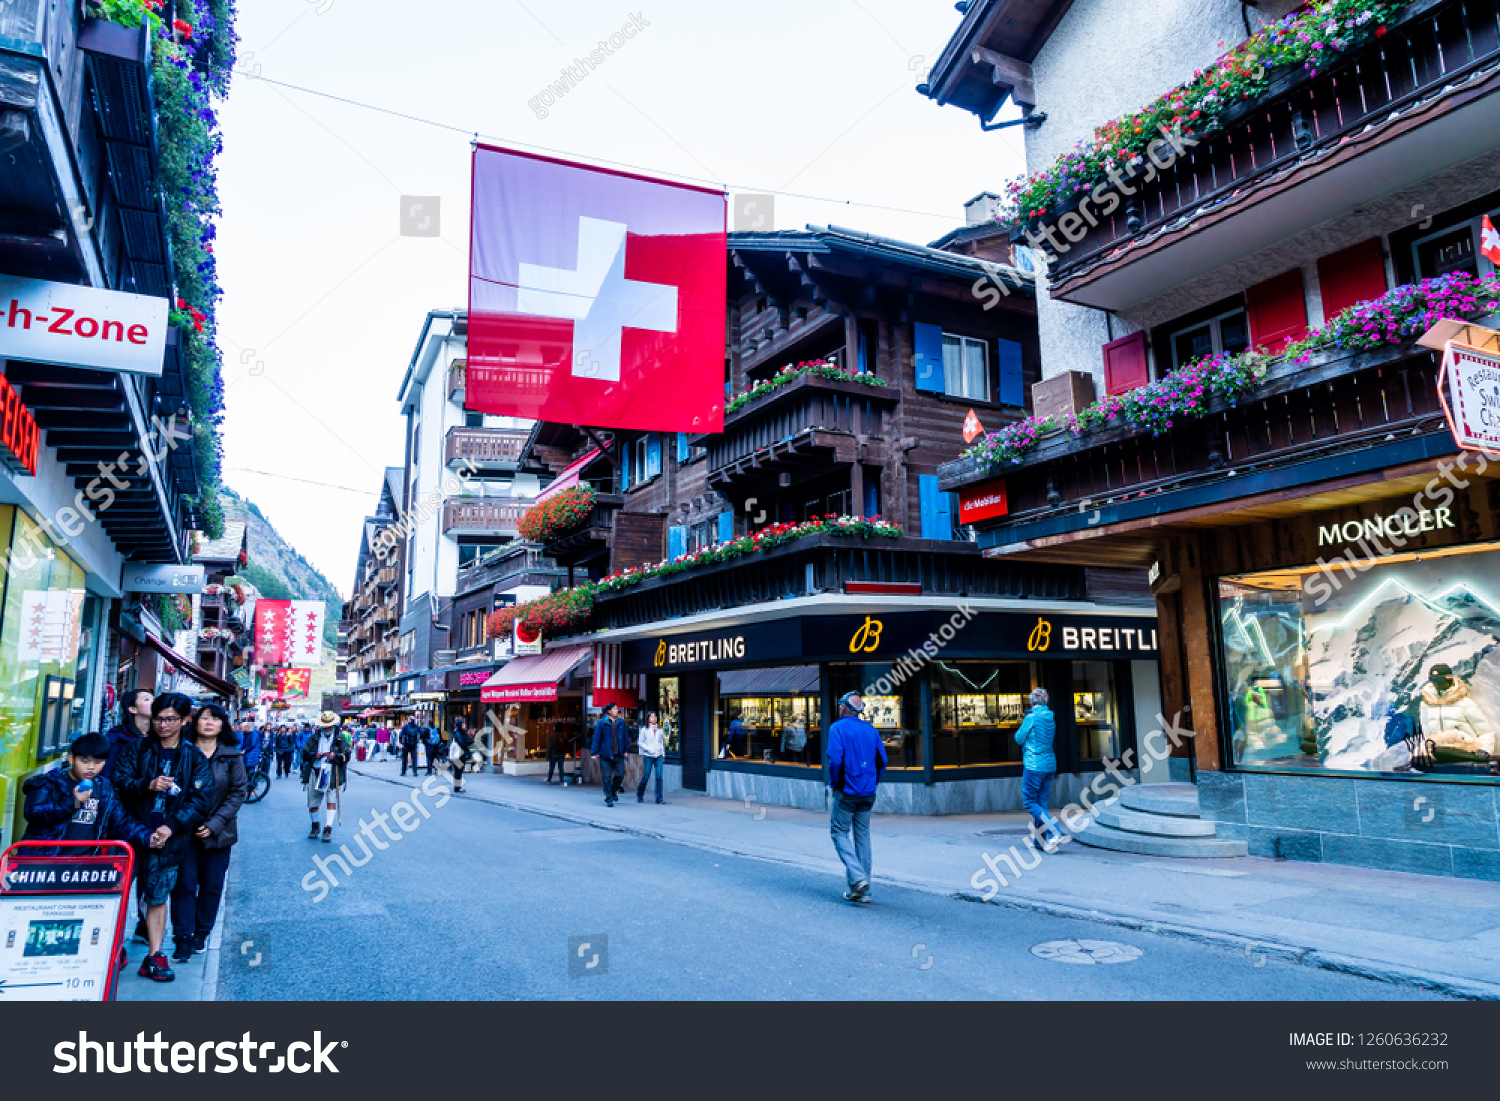 Zermatt Switzerland Aug 26 2018 Tourists Stock Photo (Edit Now) 1260636232